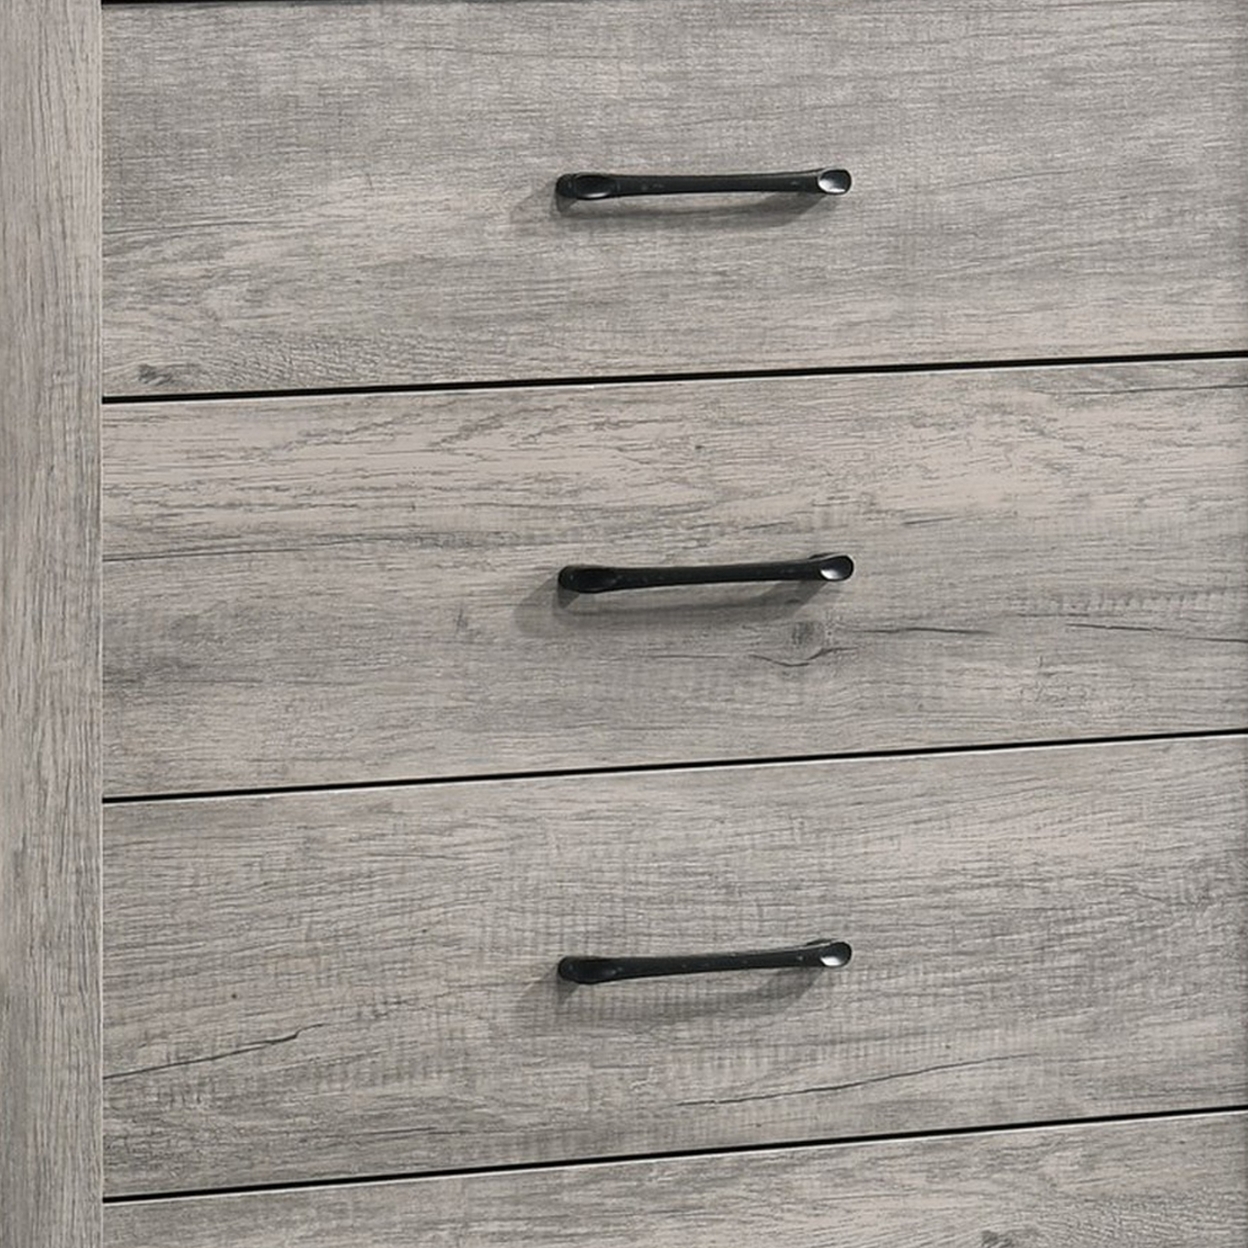 Isha 48 Inch 5 Drawer Tall Dresser Chest With Metal Handles, Driftwood Gray- Saltoro Sherpi